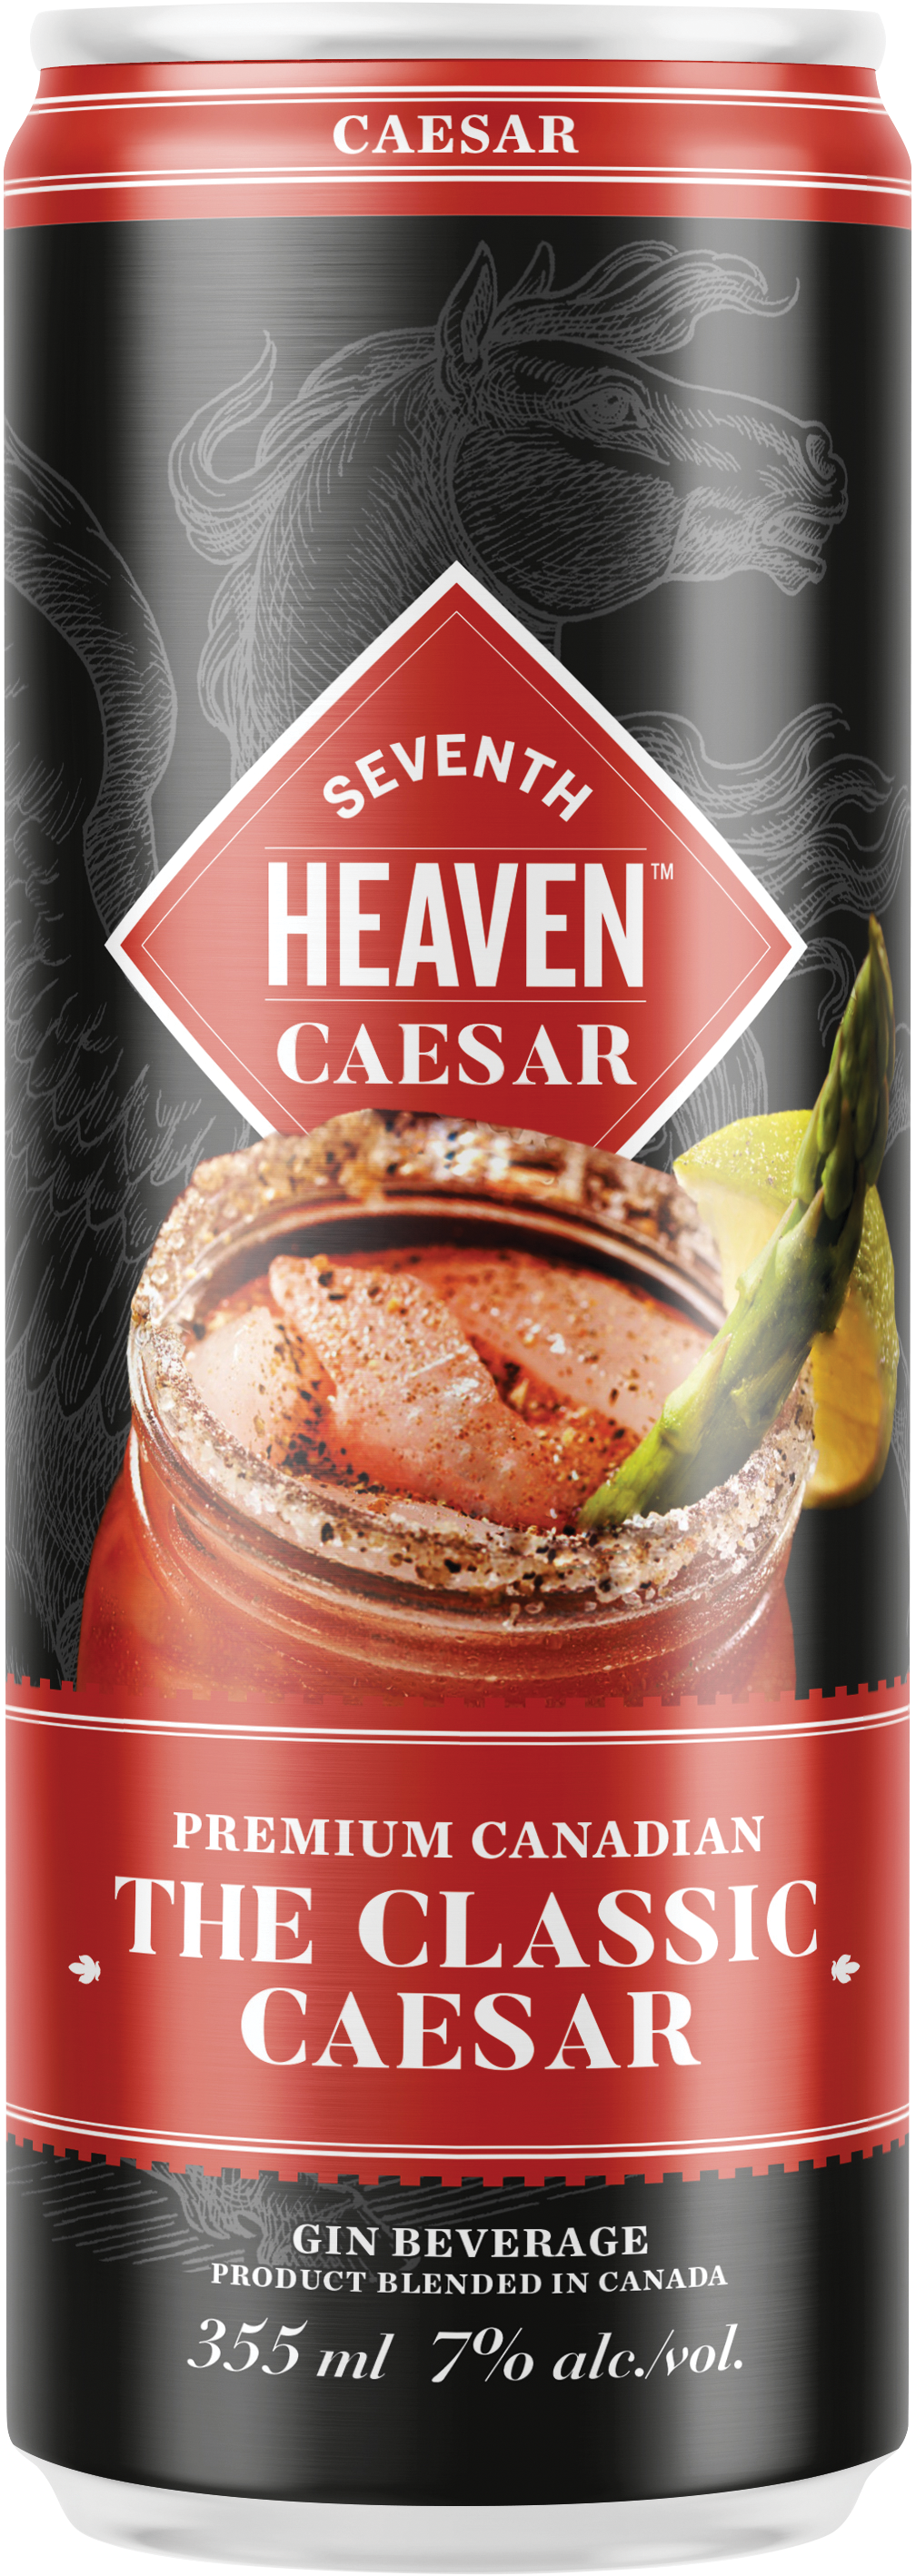 Seventh Heaven The Classic Caesar Gin Beverage